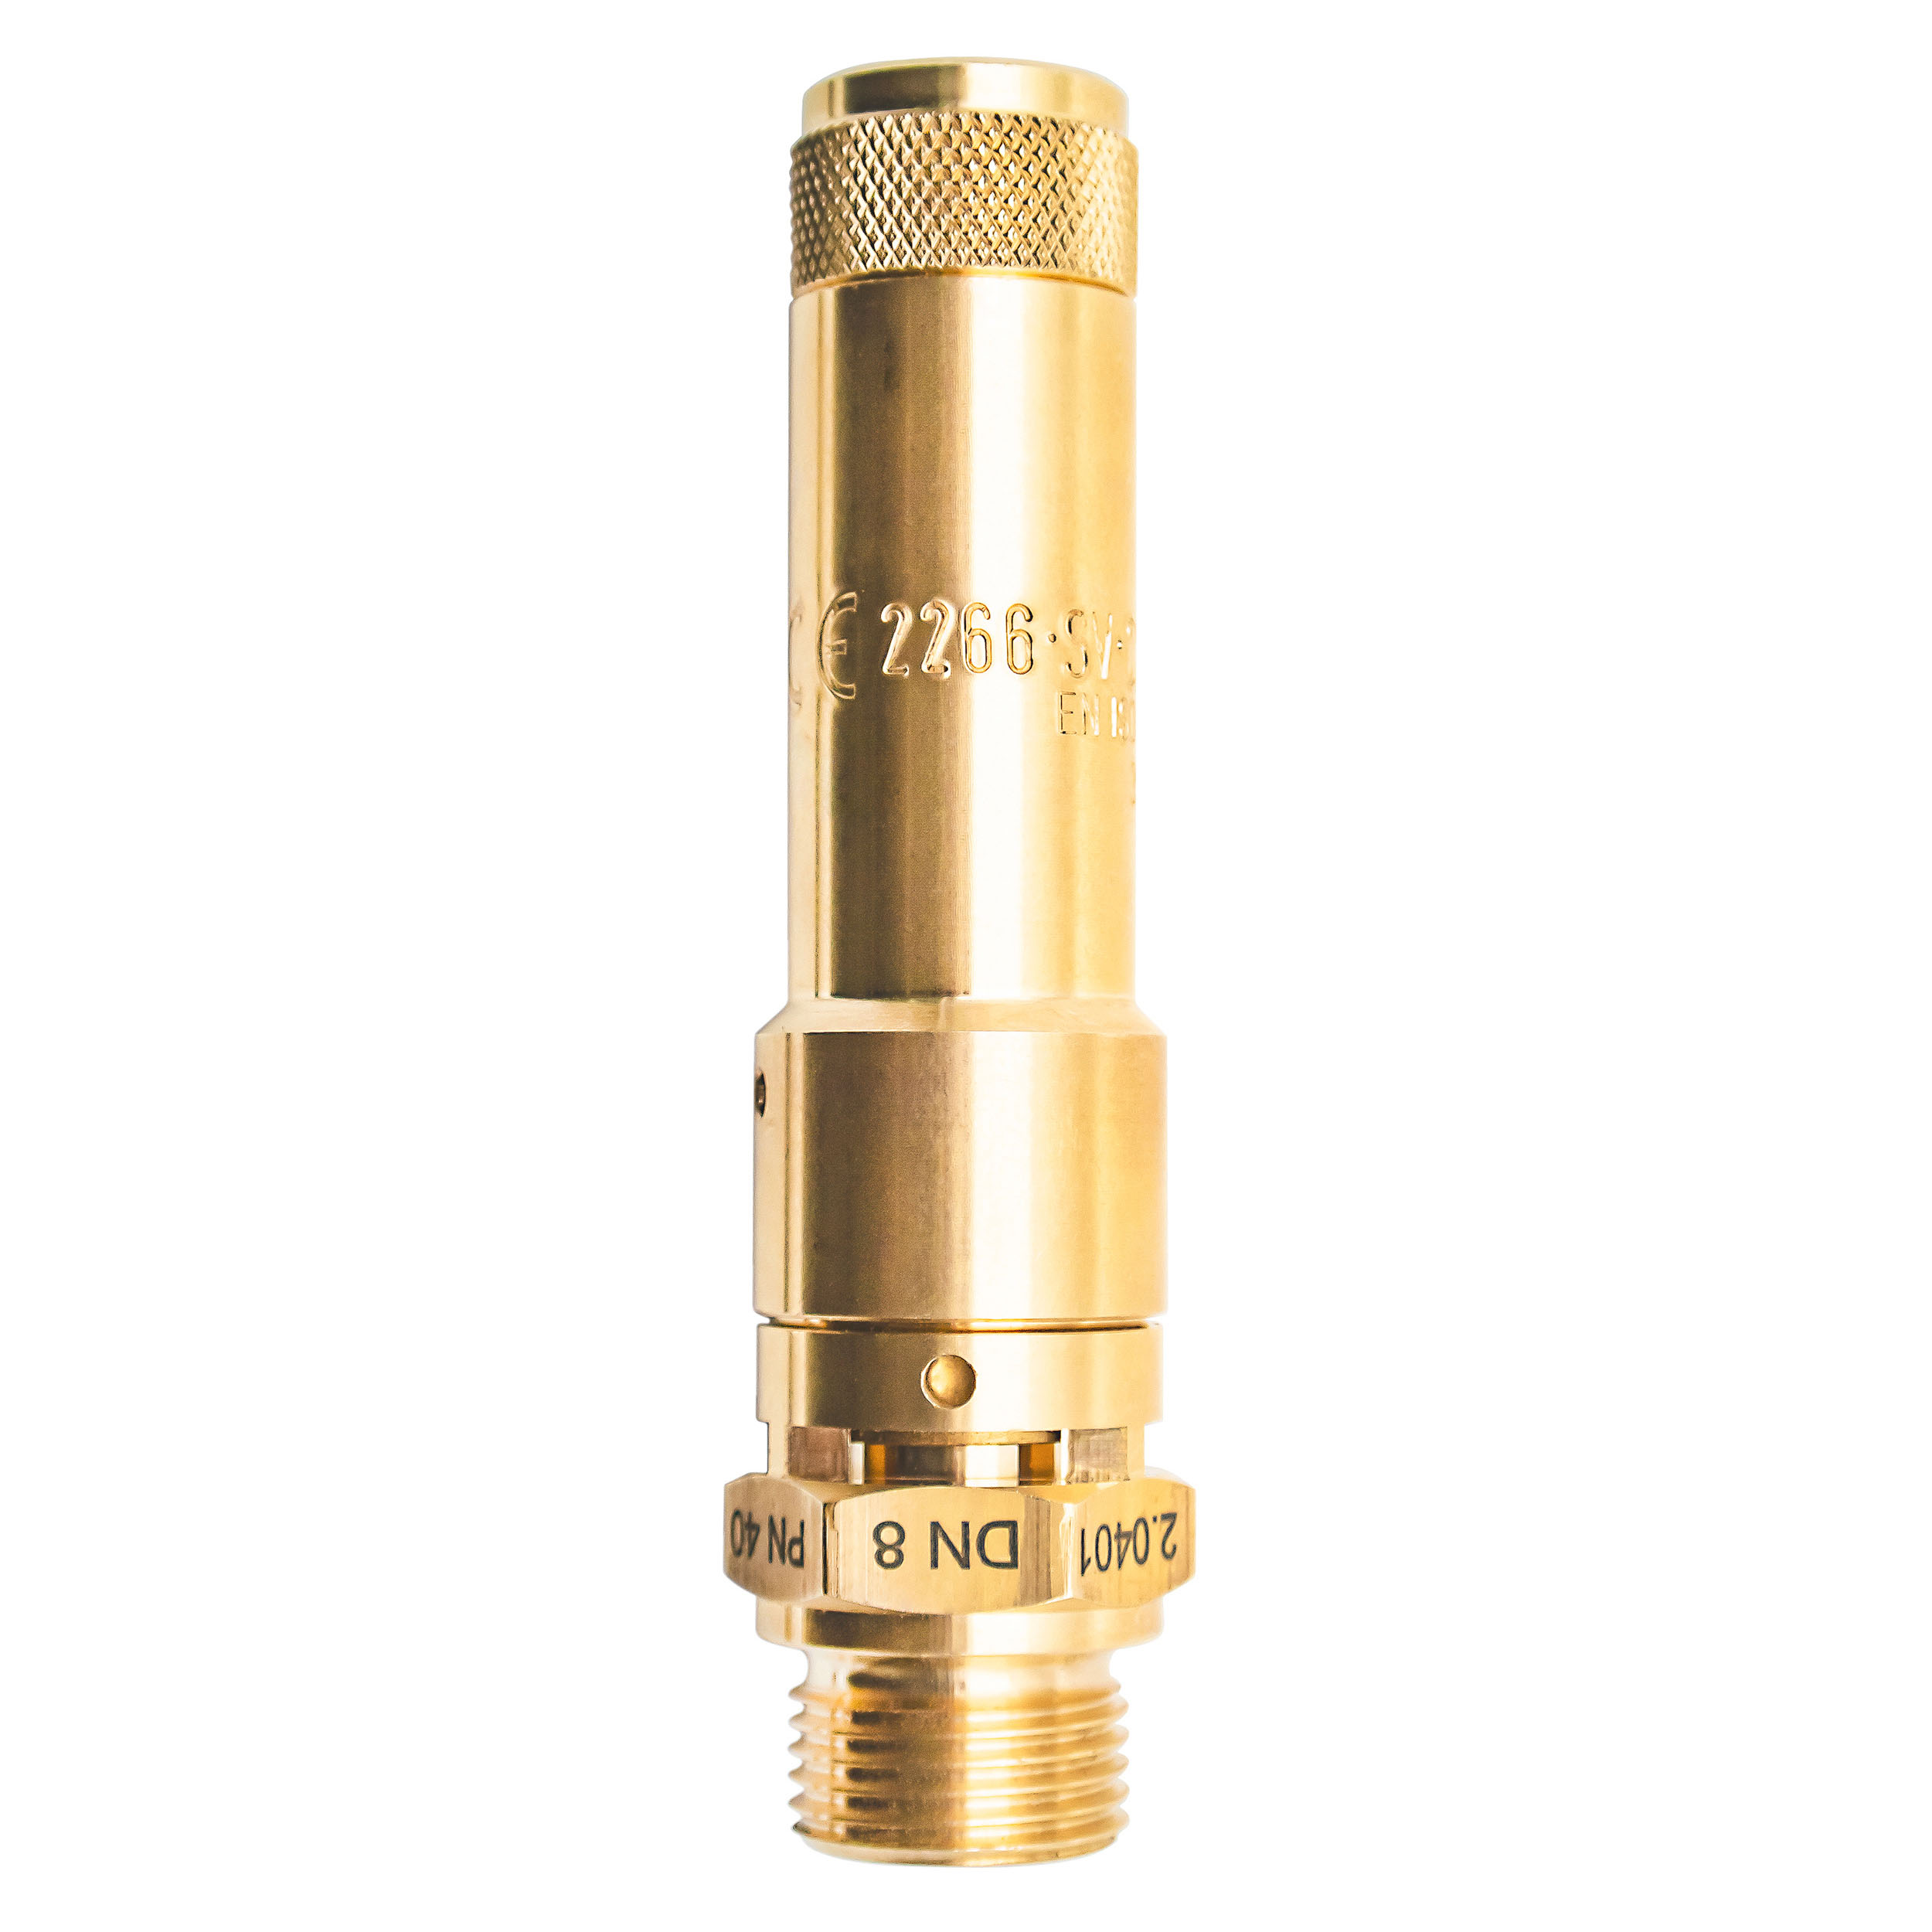 Component-tested safety valve DN 8, G½, pressure: 9.1-15 bar